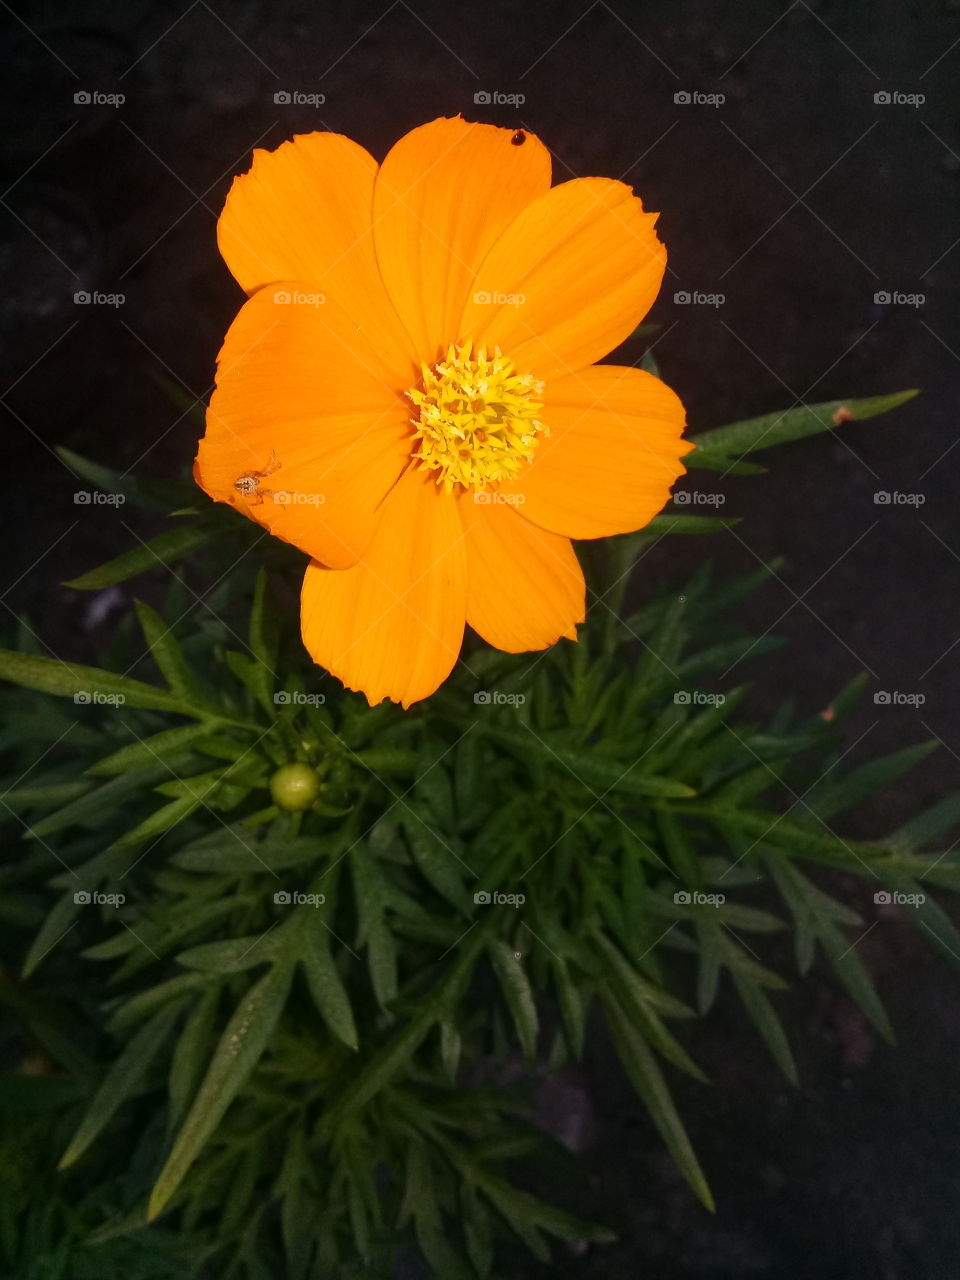 my flower